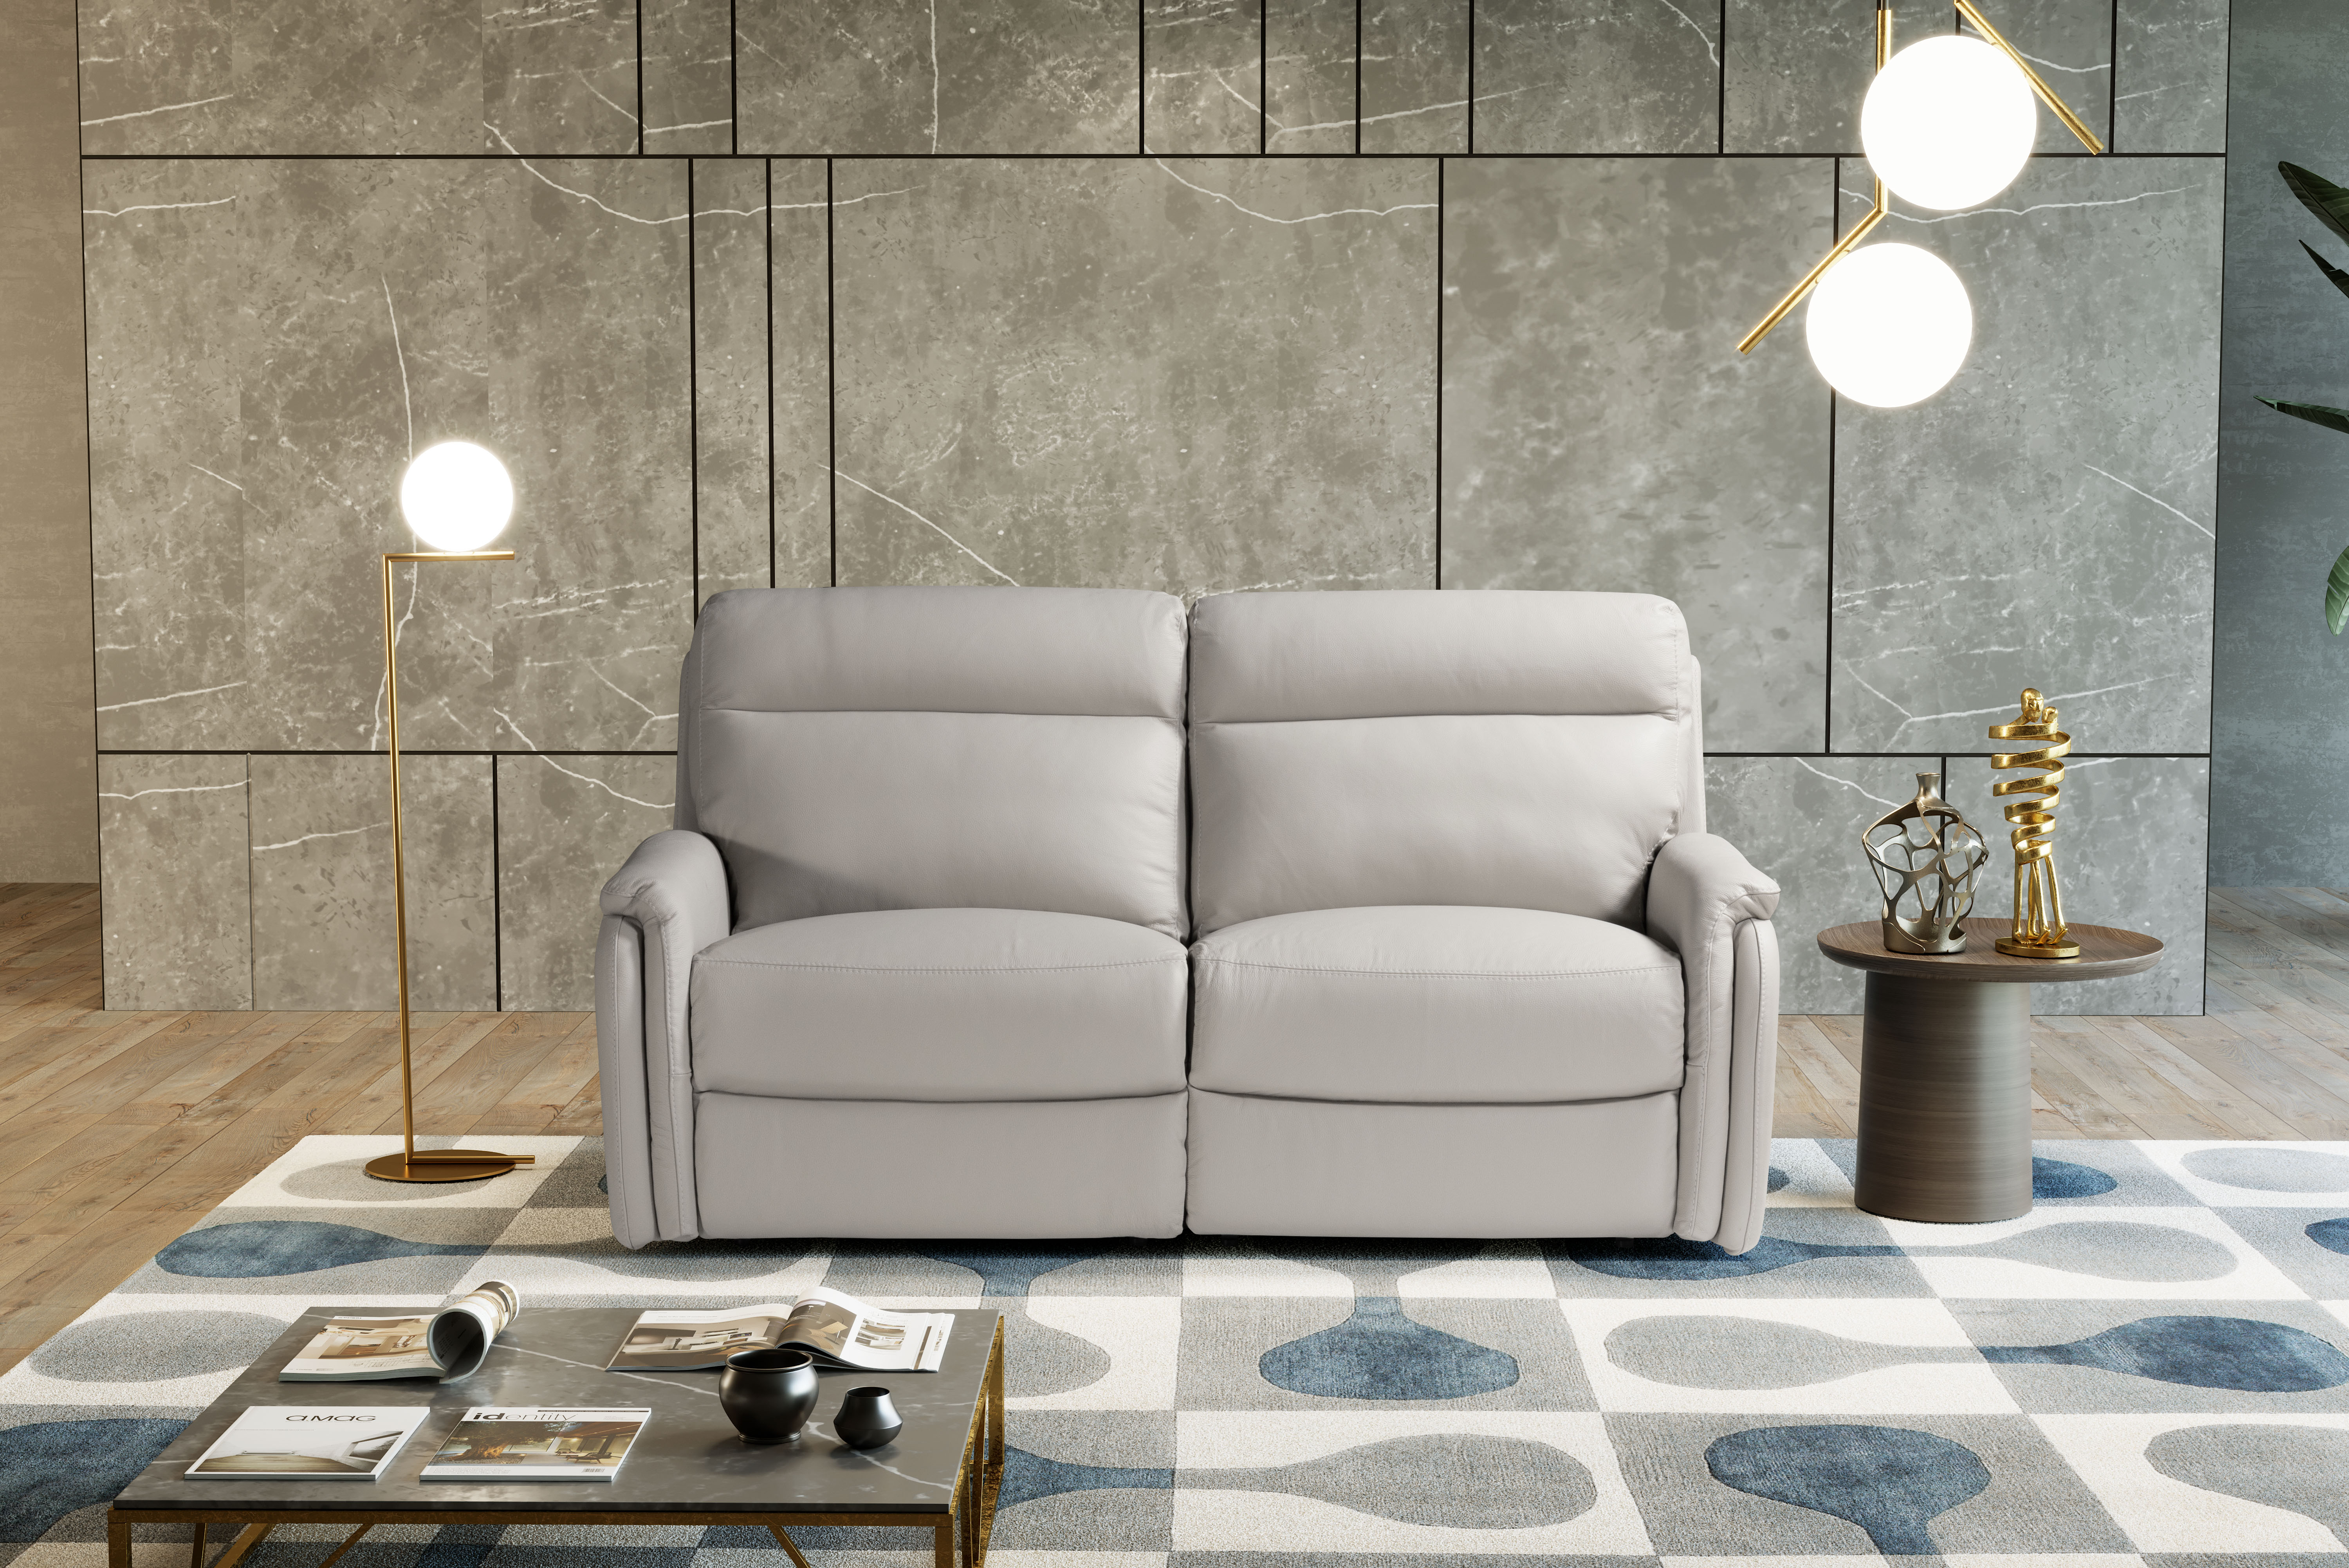 FOX Italian Leather Recliner 3 & 2 Seat Sofa by Galieri - Cenere Light Grey - Image 2 of 4